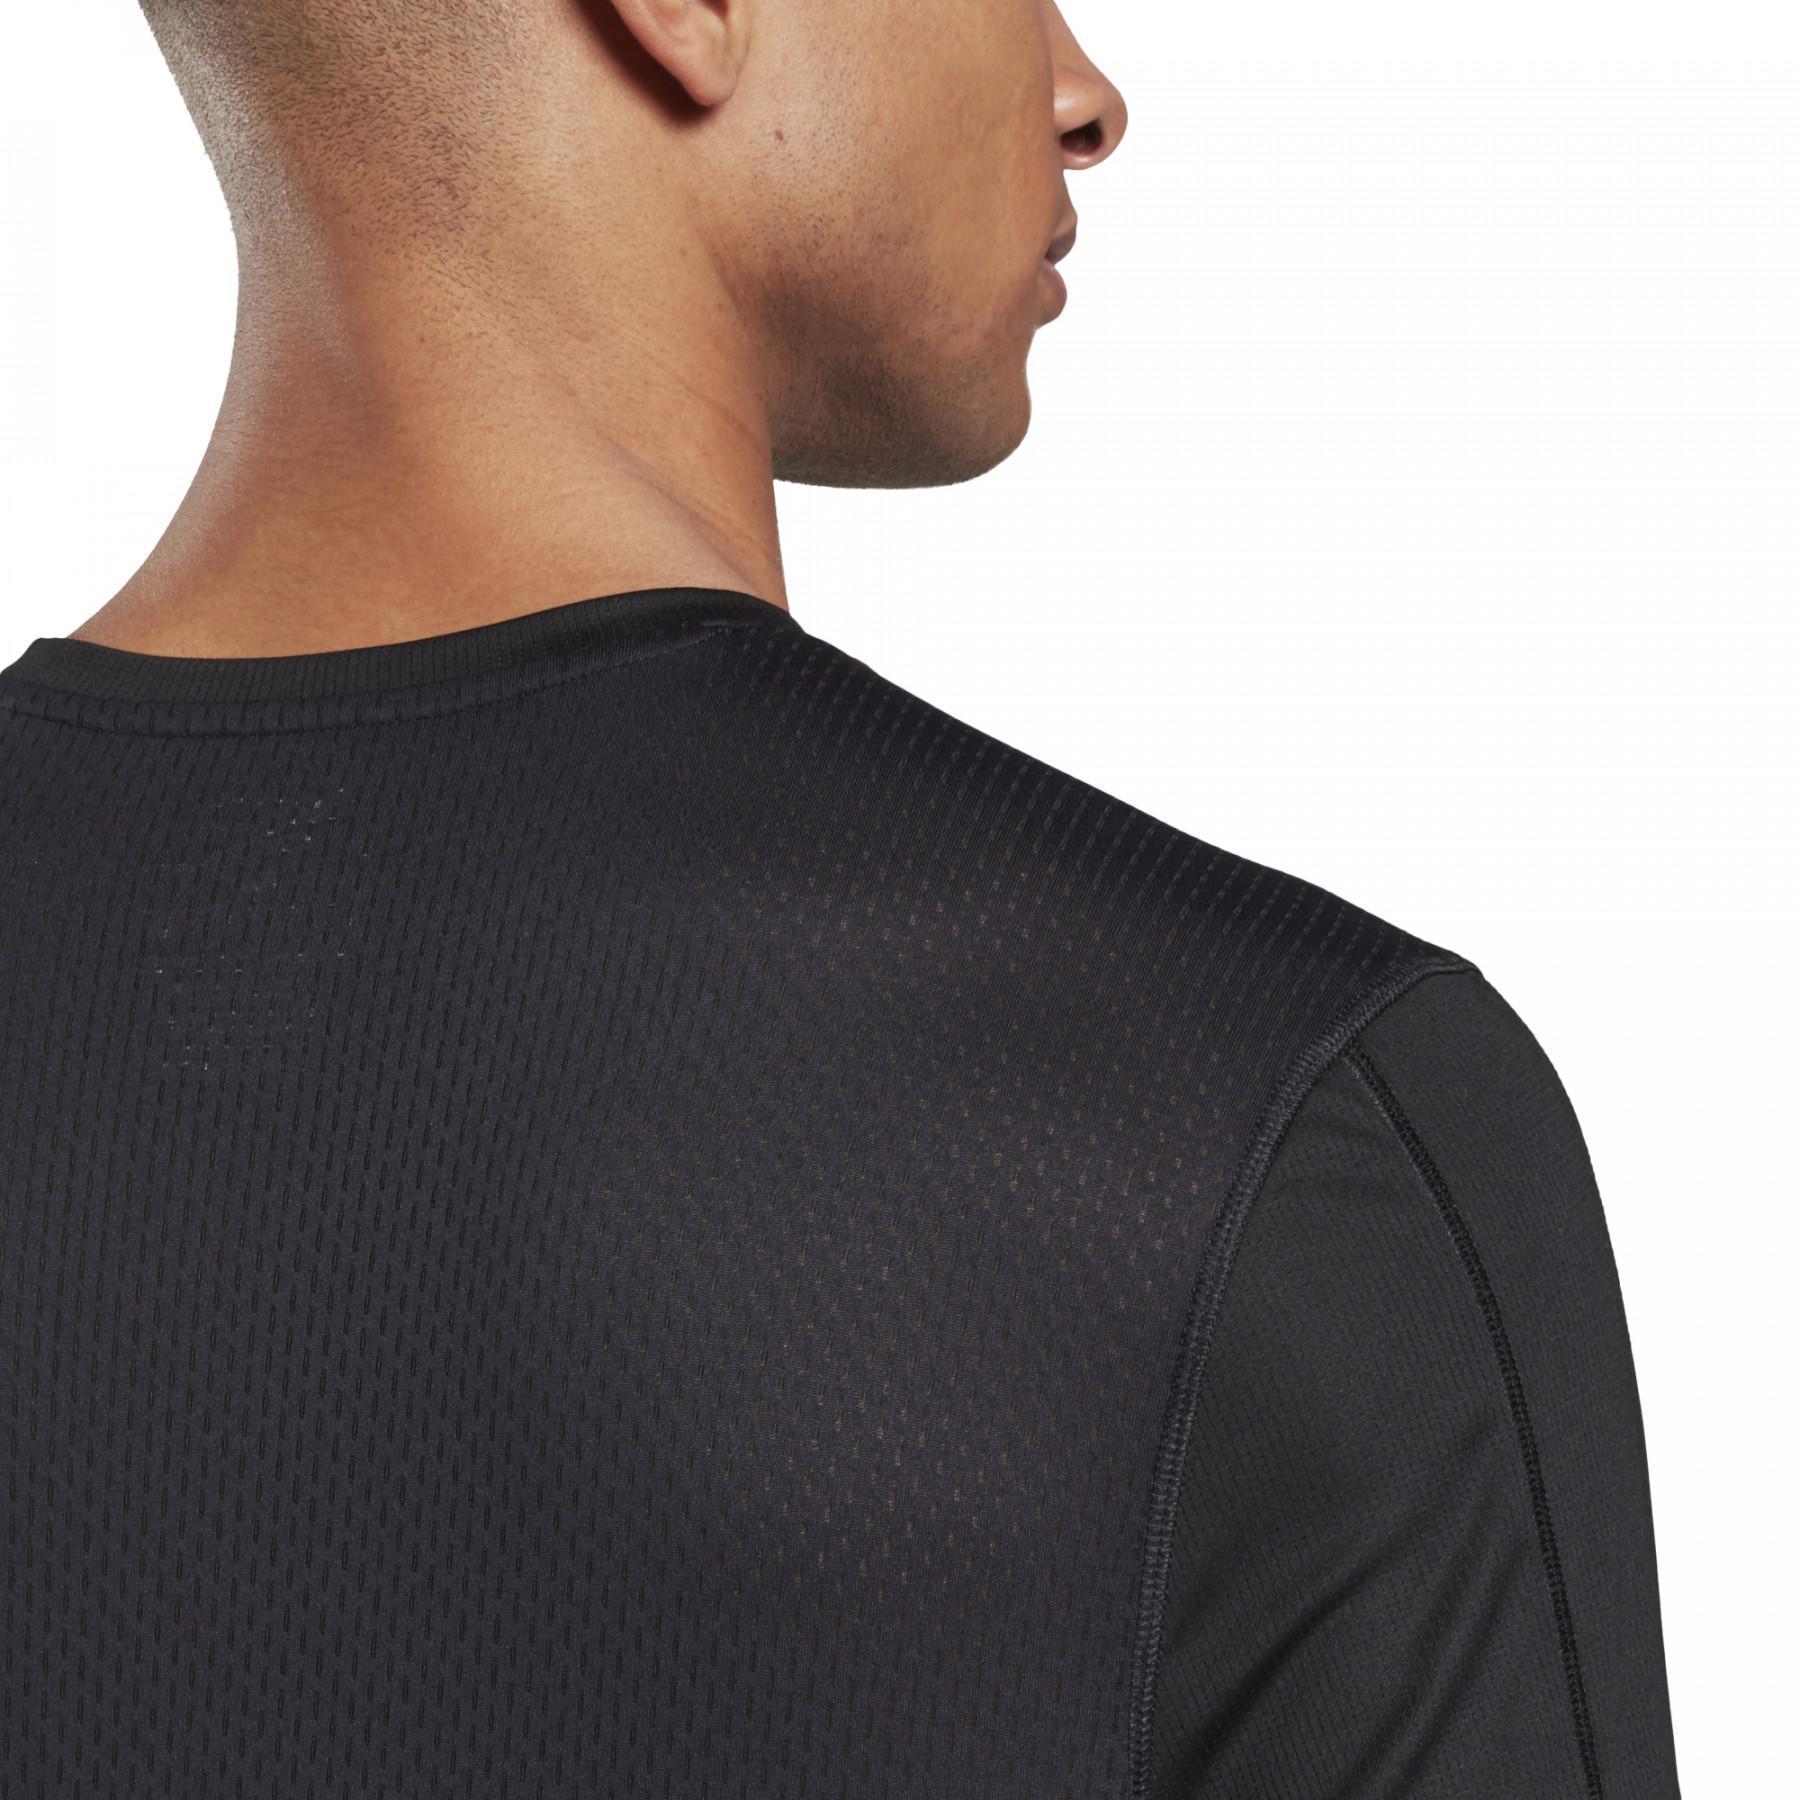 Camiseta Reebok Running Essentials Long Sleeve Shirt